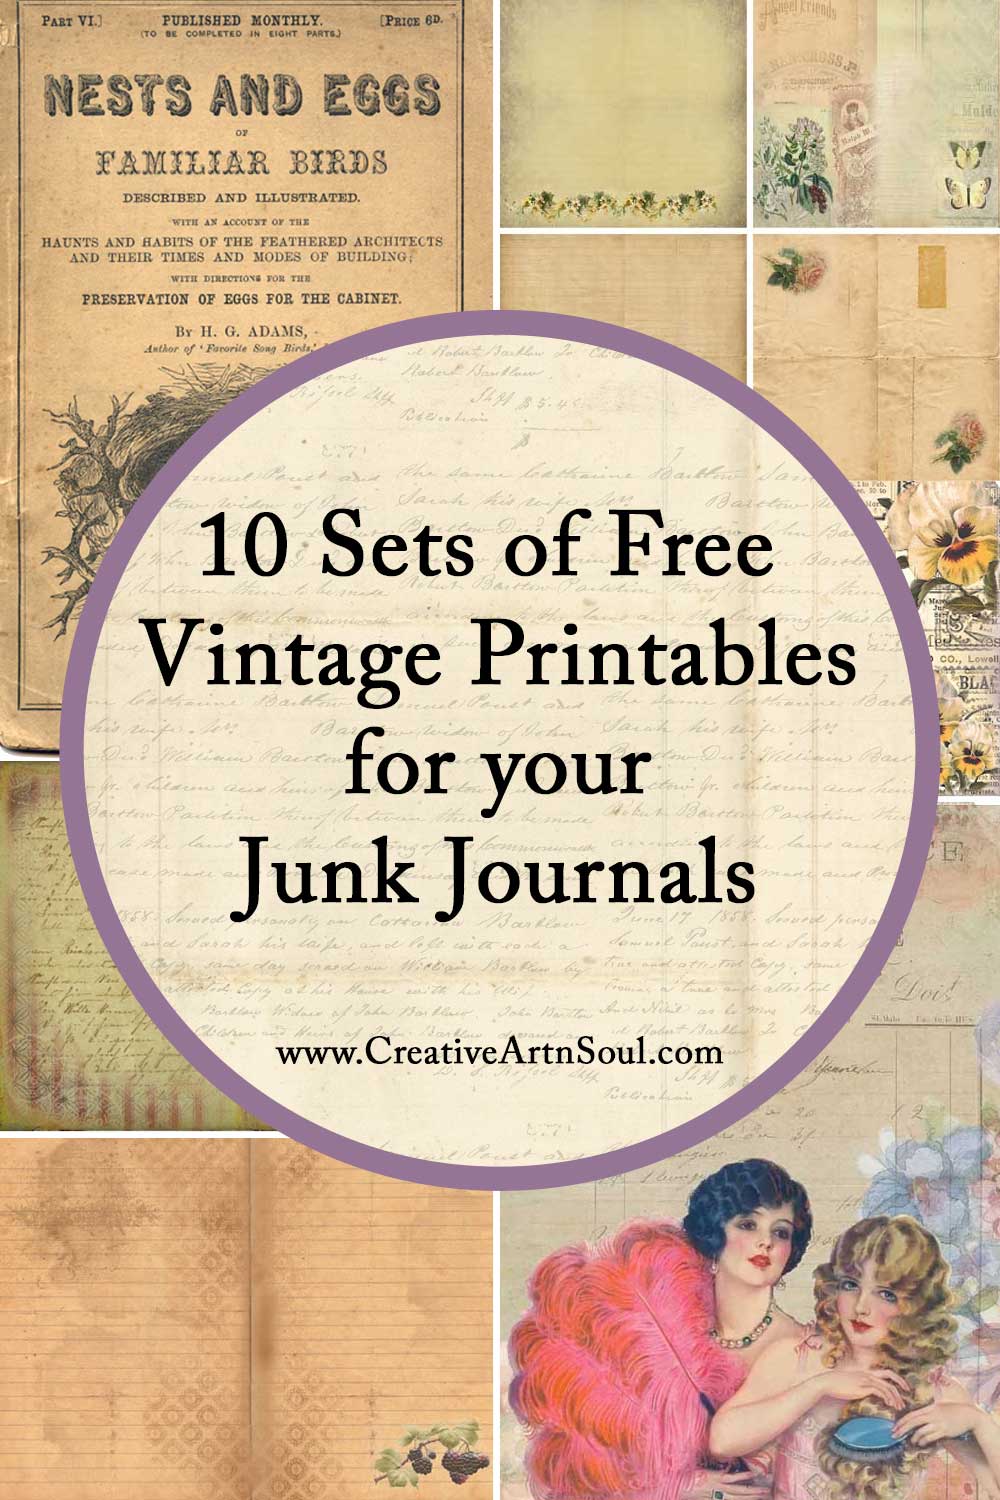 10-sets-of-free-vintage-printables-for-your-junk-journals-creative